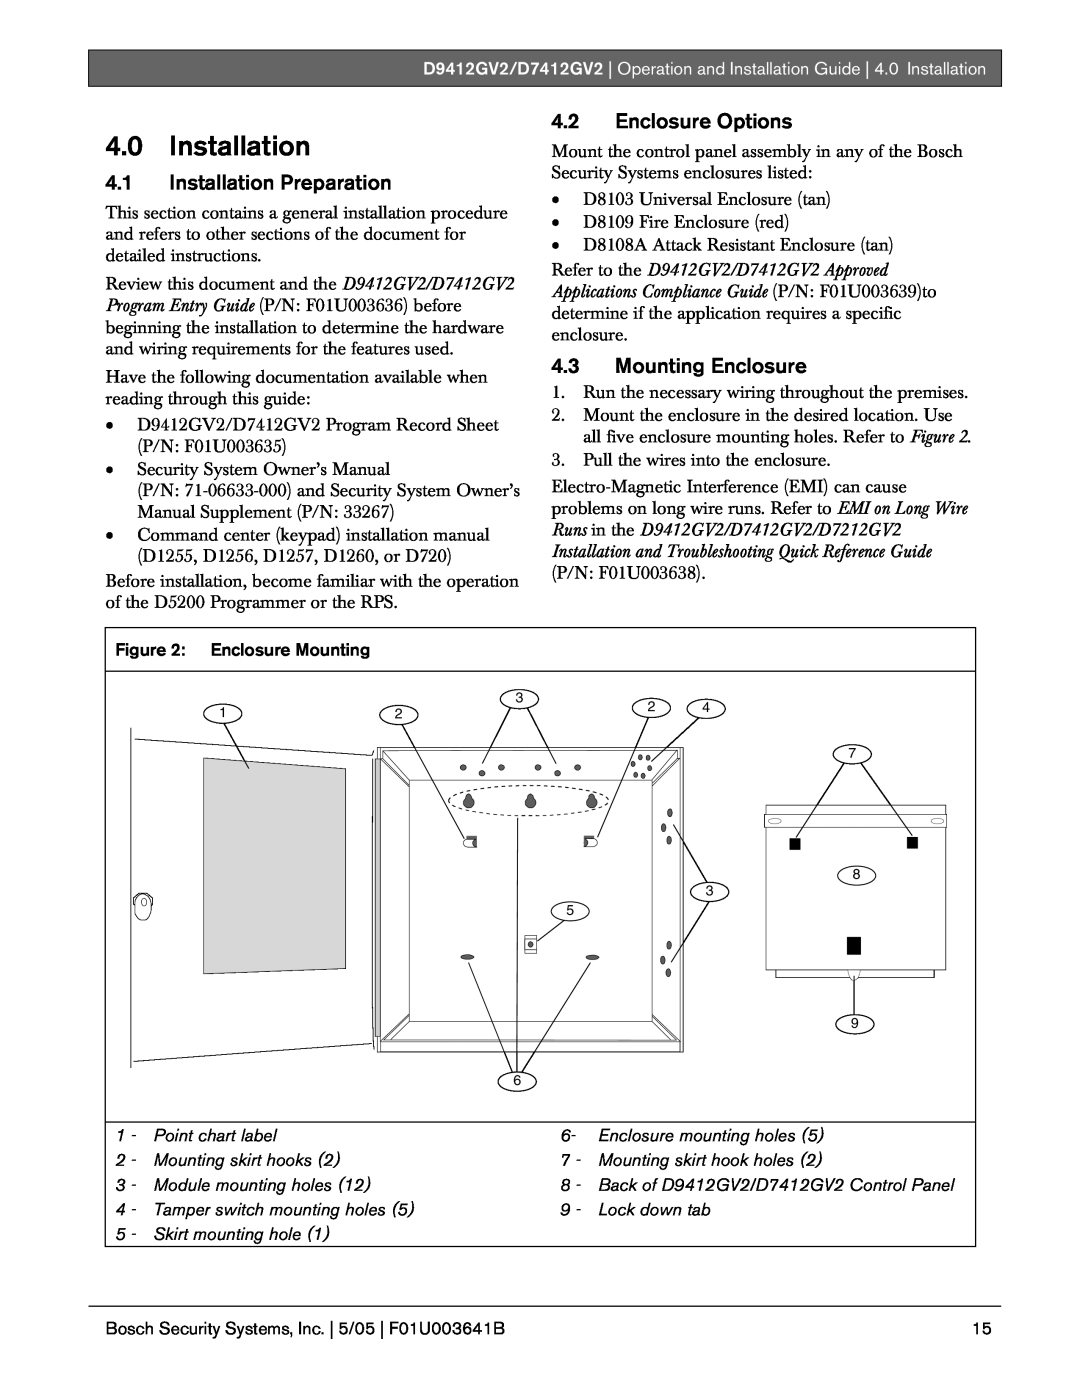 Bosch Appliances D9412GV2 manual 4.0Installation, 4.1Installation Preparation, 4.2Enclosure Options, 4.3Mounting Enclosure 